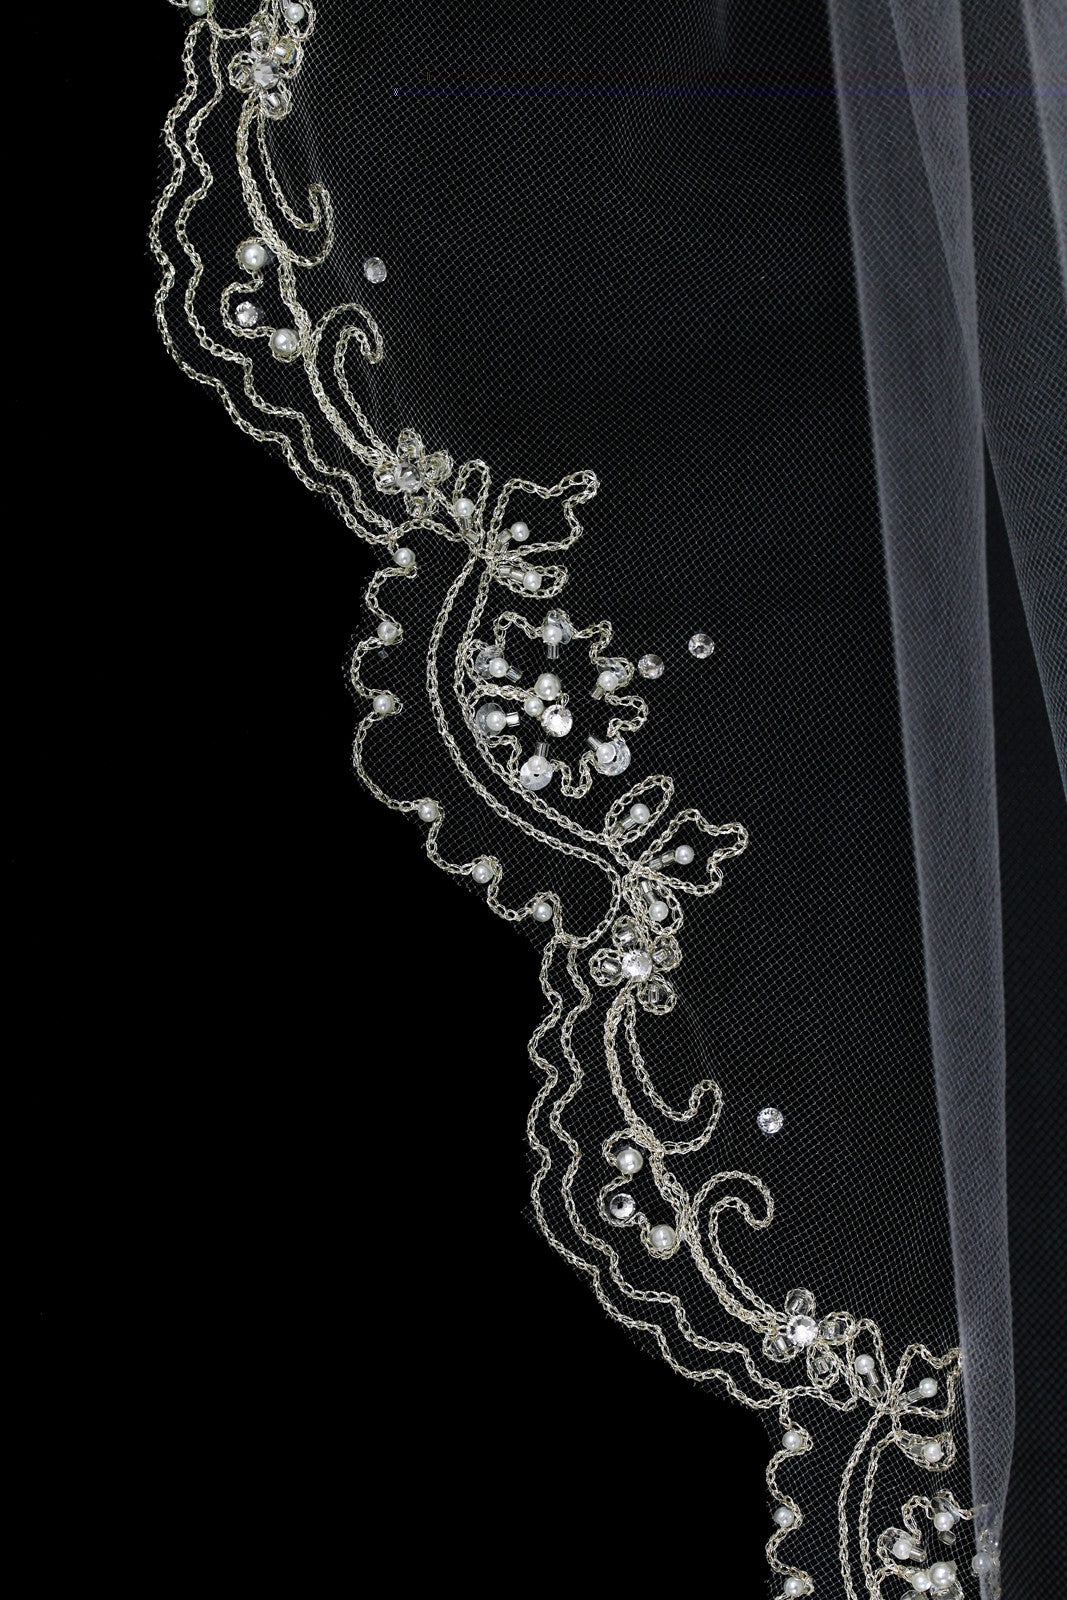 Meliza – Vintage scalloped ivory embroidered Beaded wedding veil